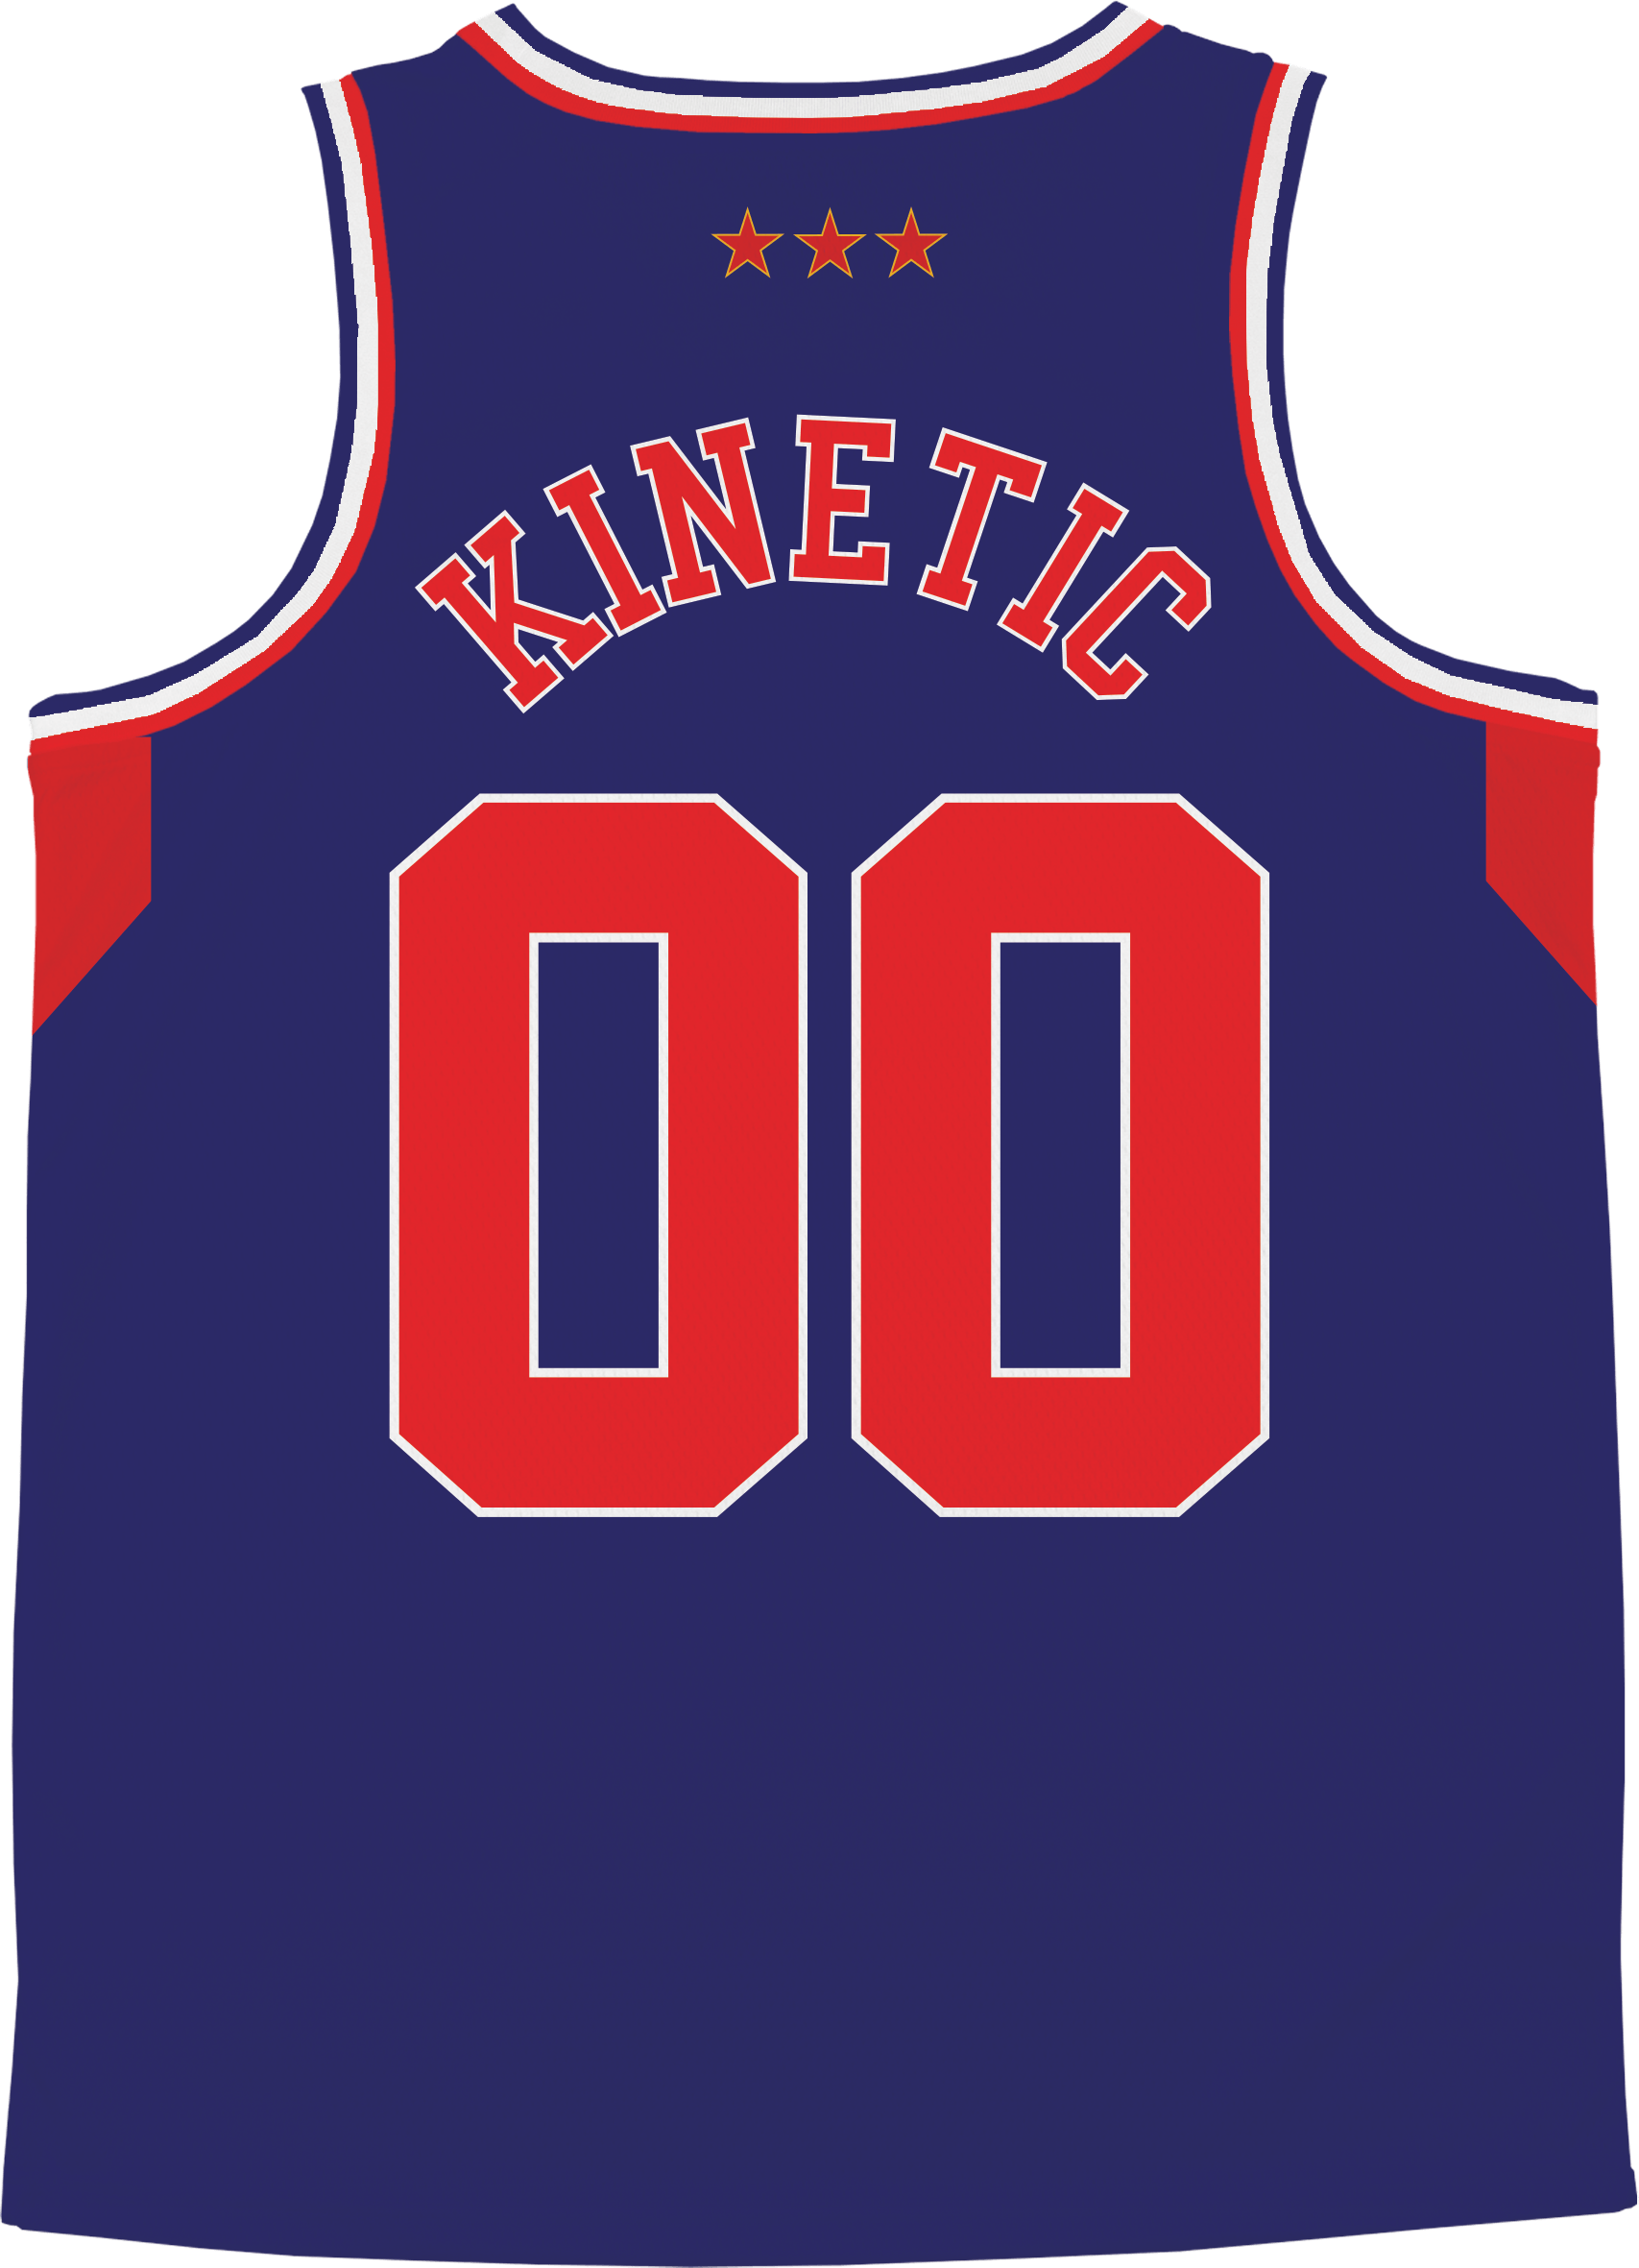 Kappa Sigma - Retro Ballers Basketball Jersey - Kinetic Society